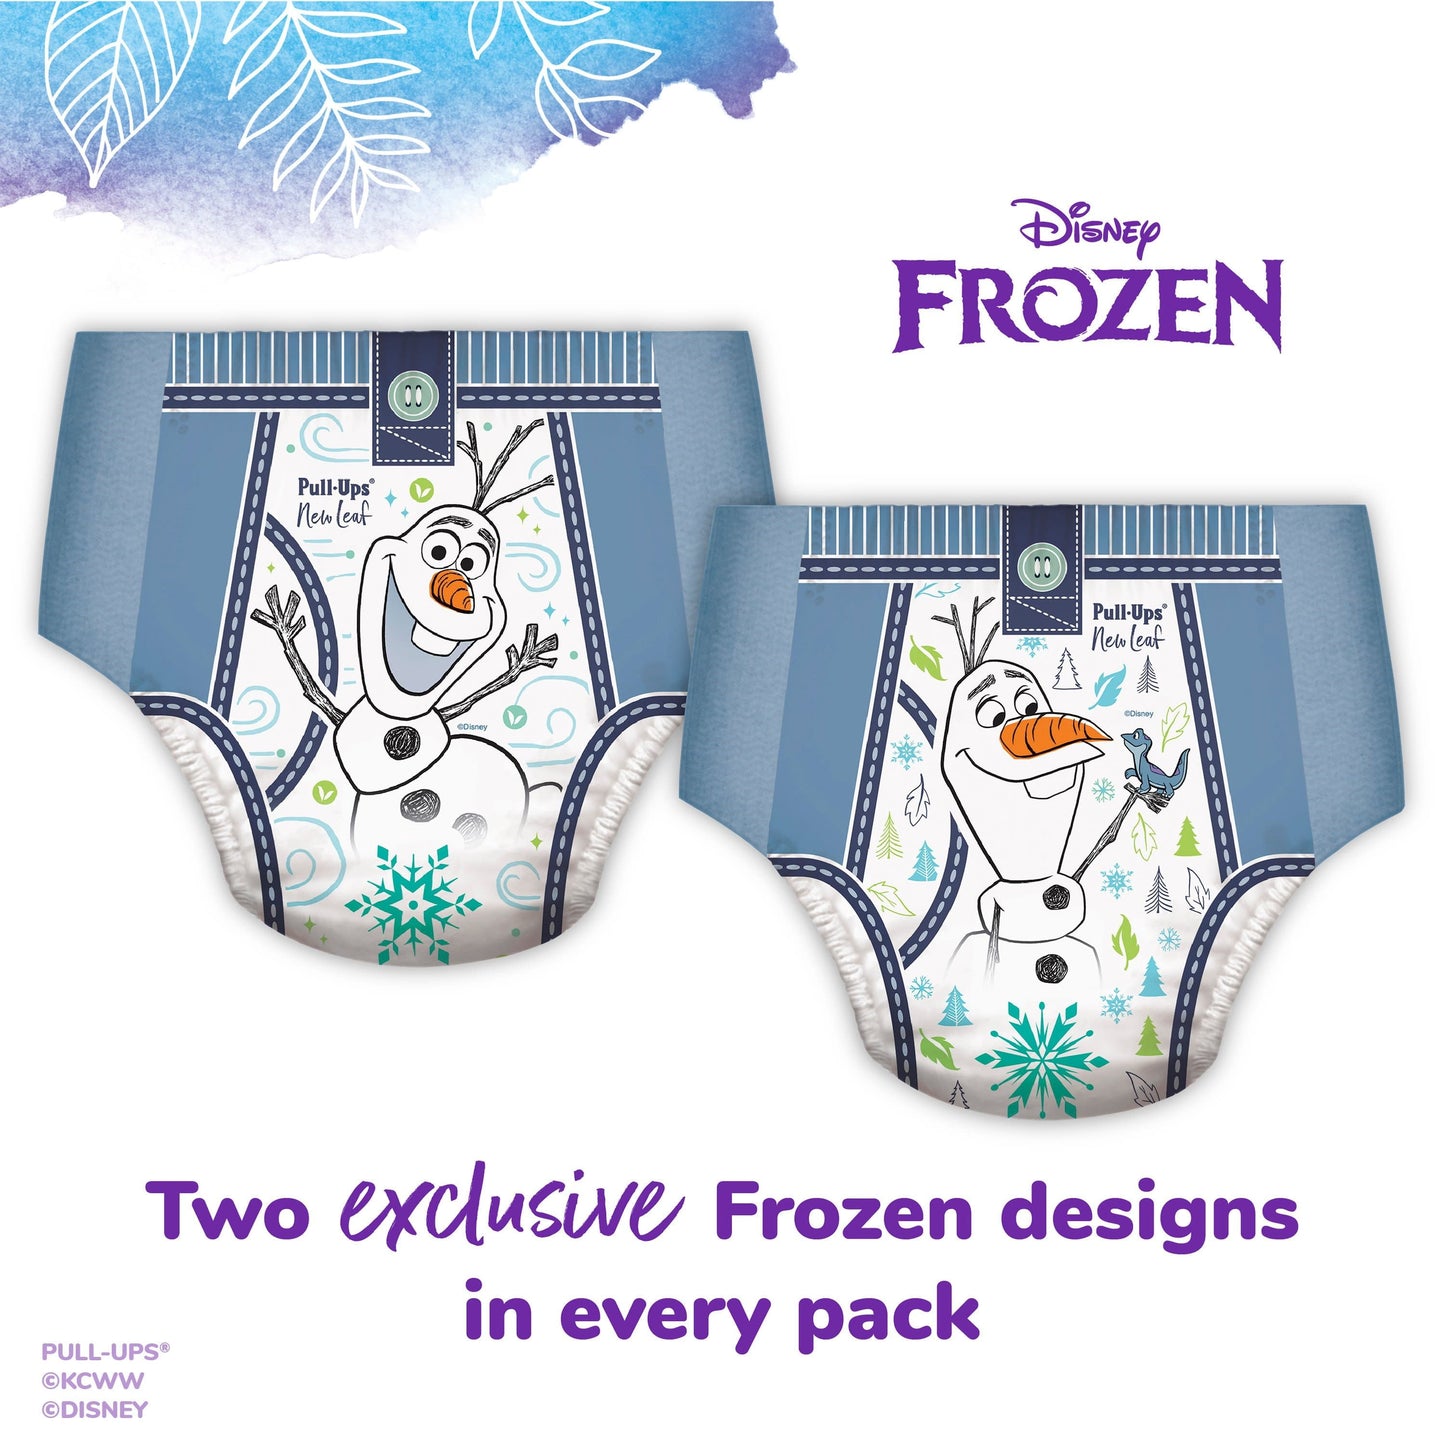 Pull-Ups New Leaf Boys' Disney Frozen Training Pants, 3T-4T, 54 Ct